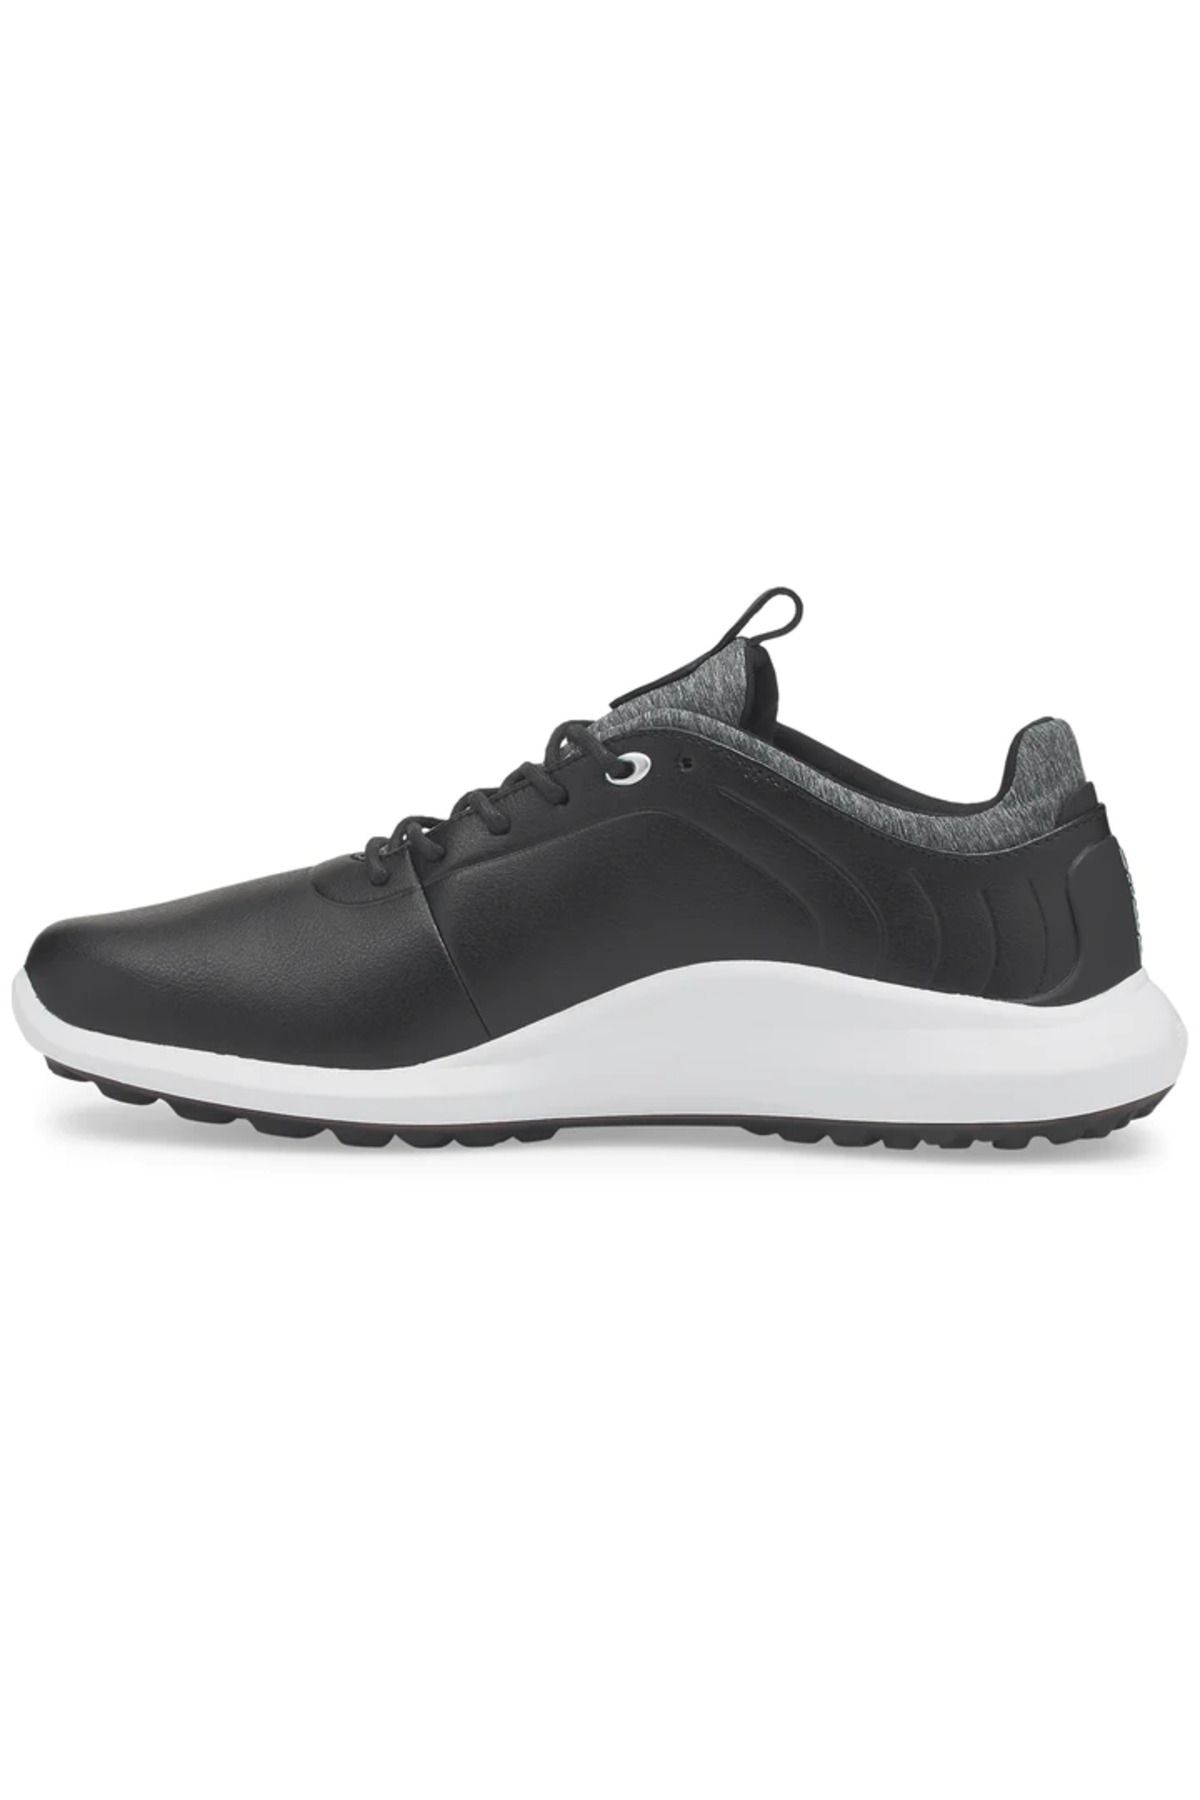 Puma Ignate Pro Shoes - Erkek Ignate Pro Golf Ayakkabısı